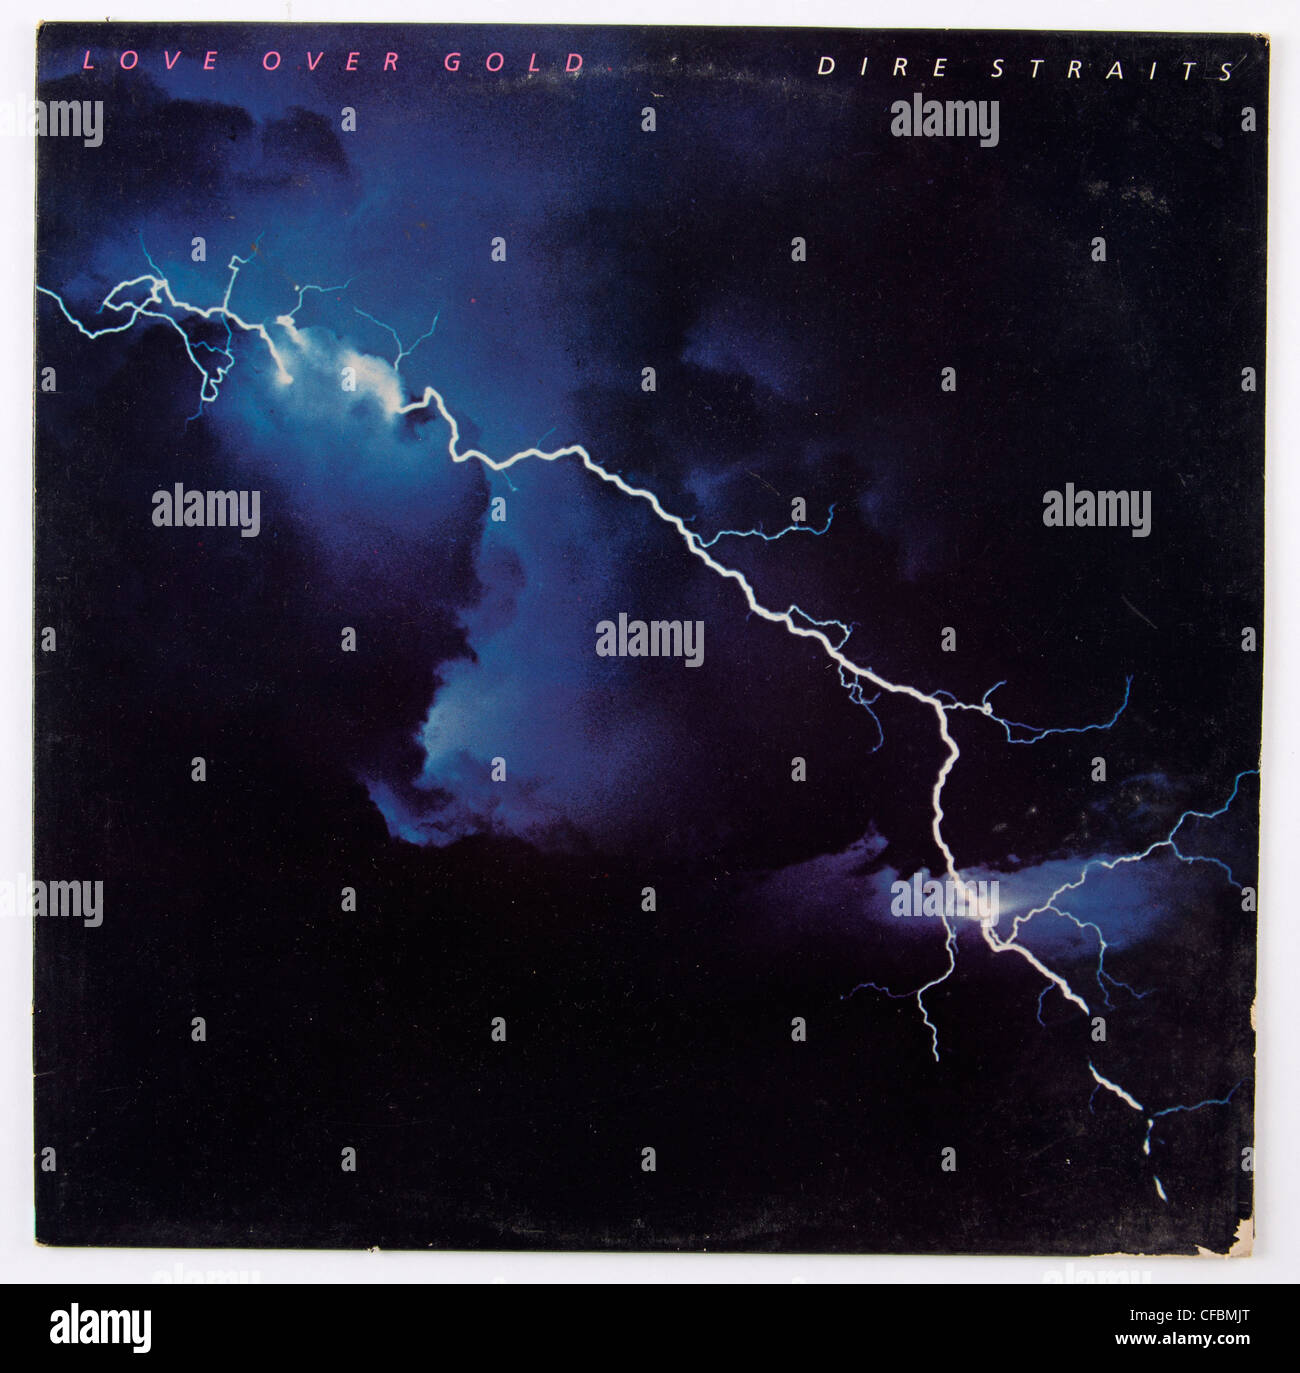 Dire Straits, Love Over Gold album Stock Photo - Alamy